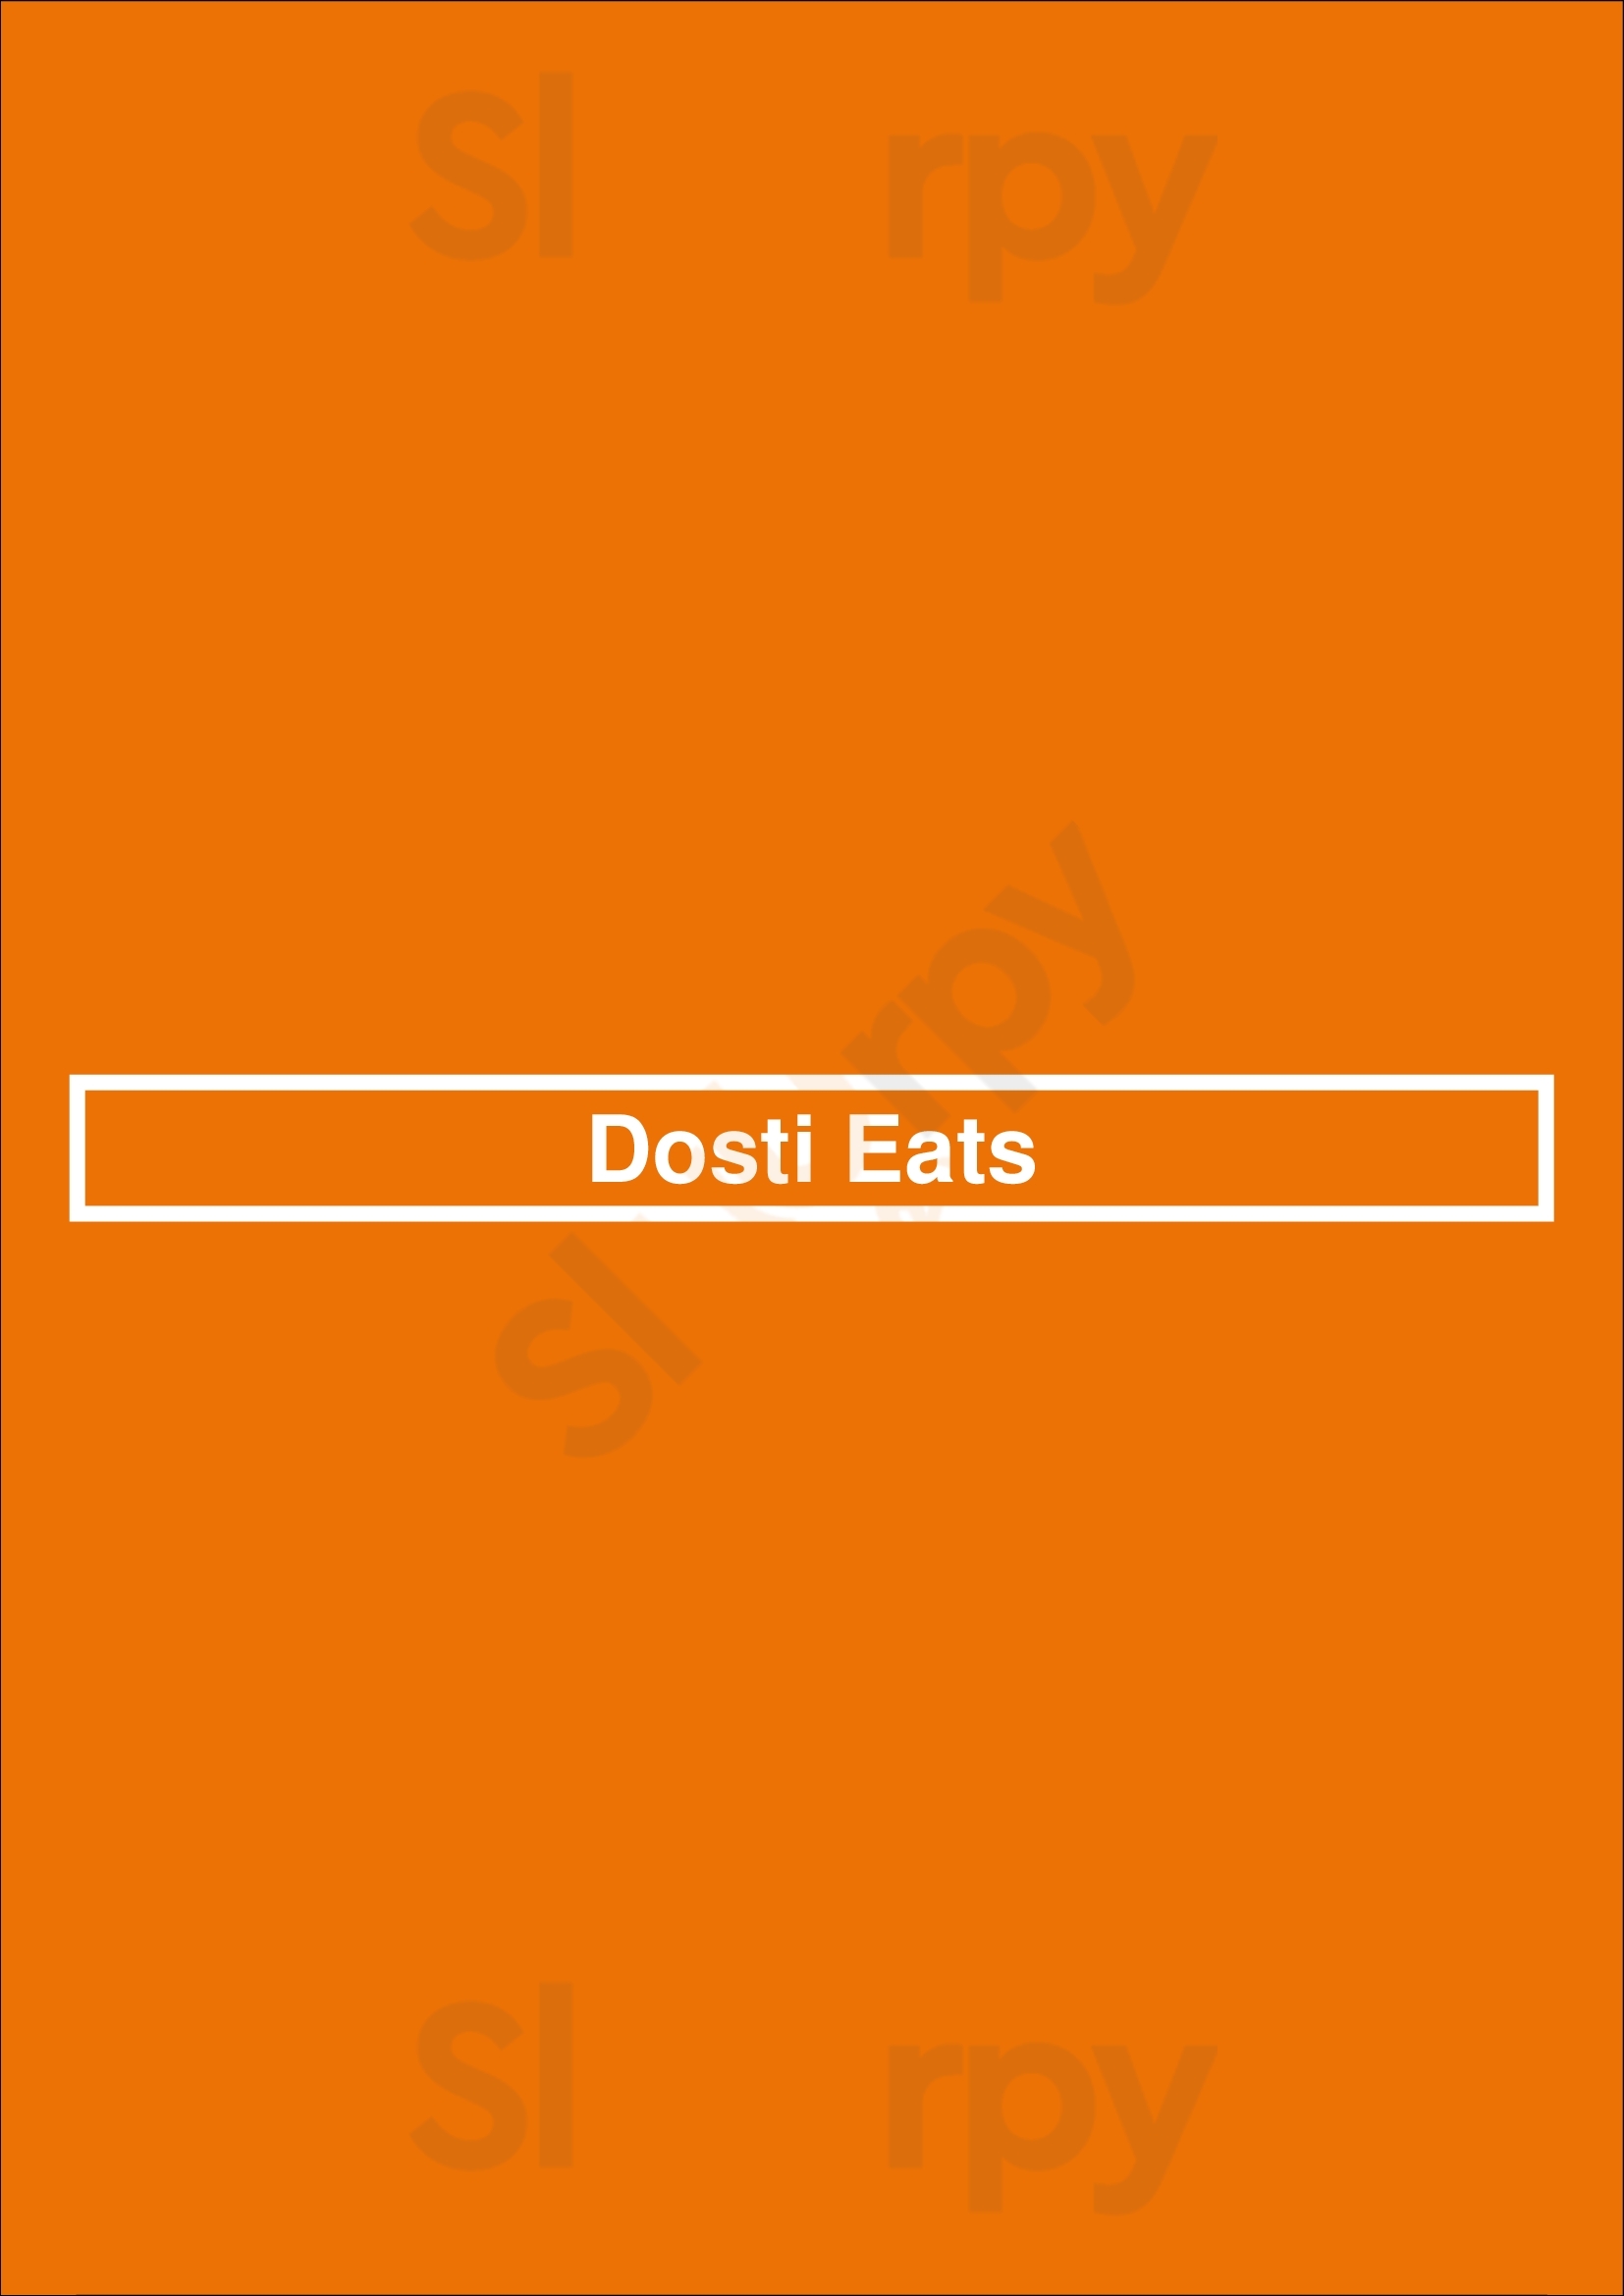 Dosti Eats Barrie Menu - 1